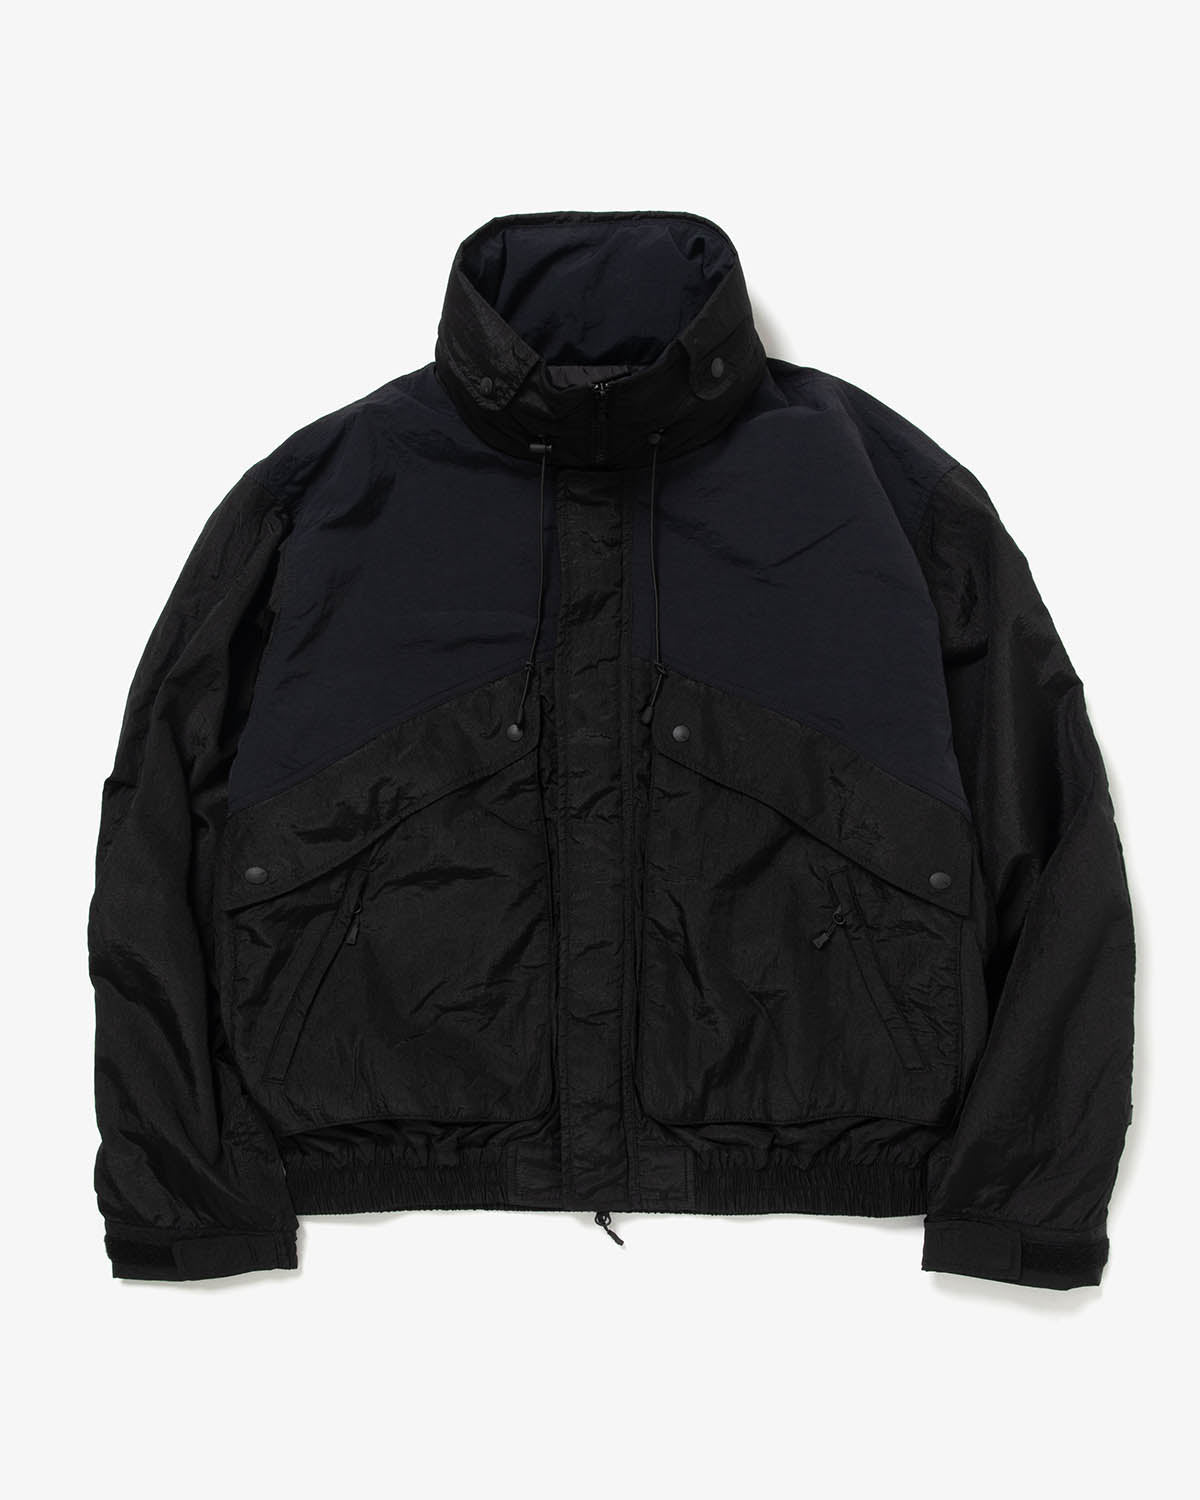 NODAS half sleeve jacket - black